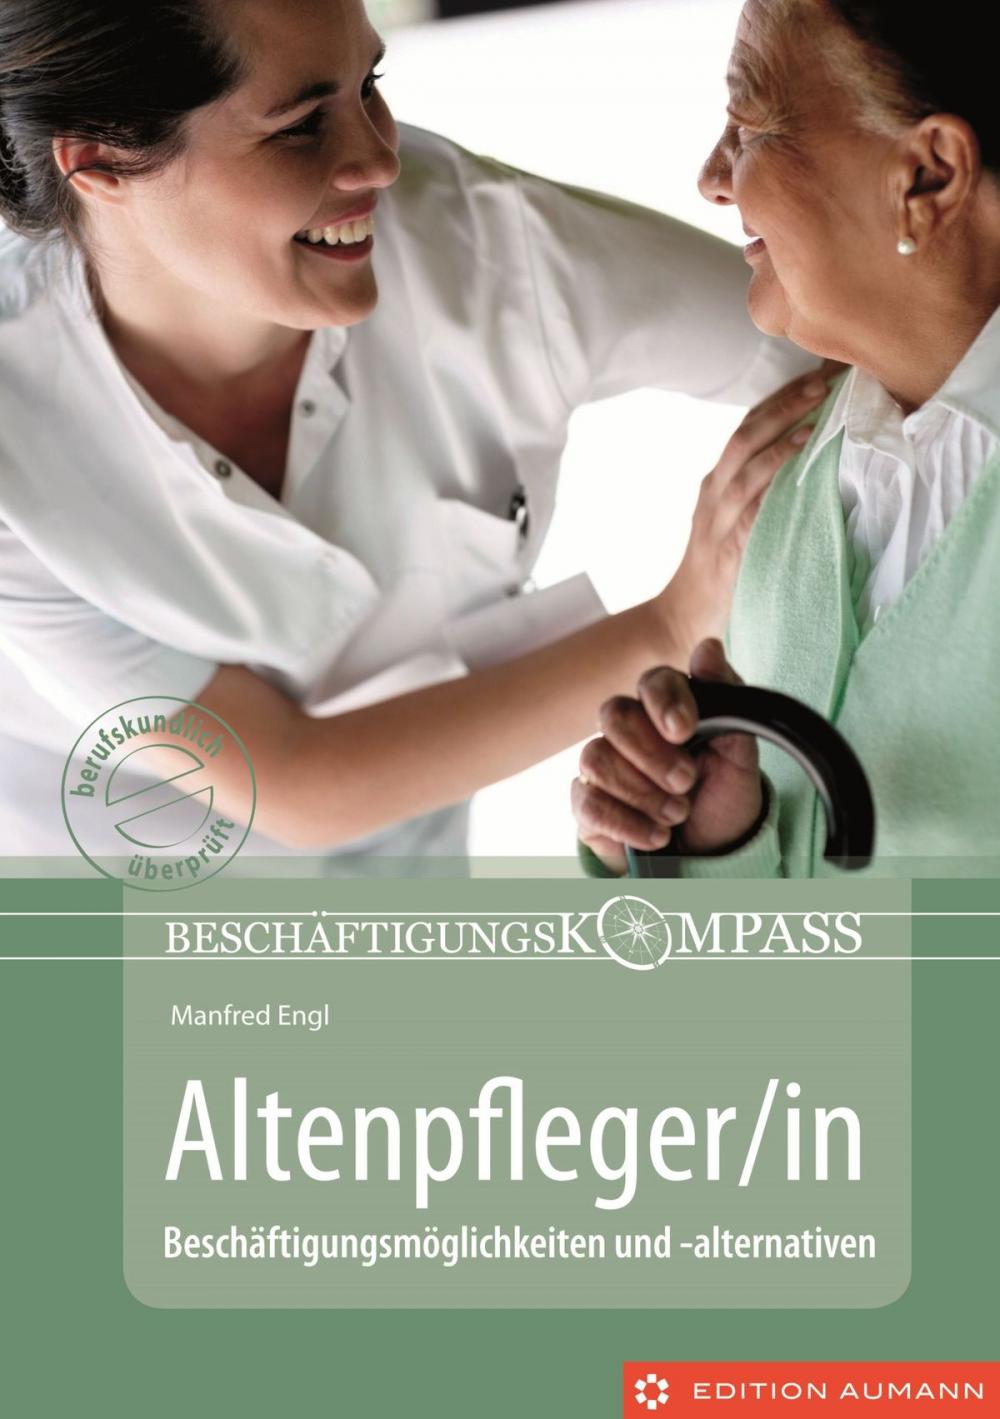 Big bigCover of Beschäftigungskompass Altenpfleger/in